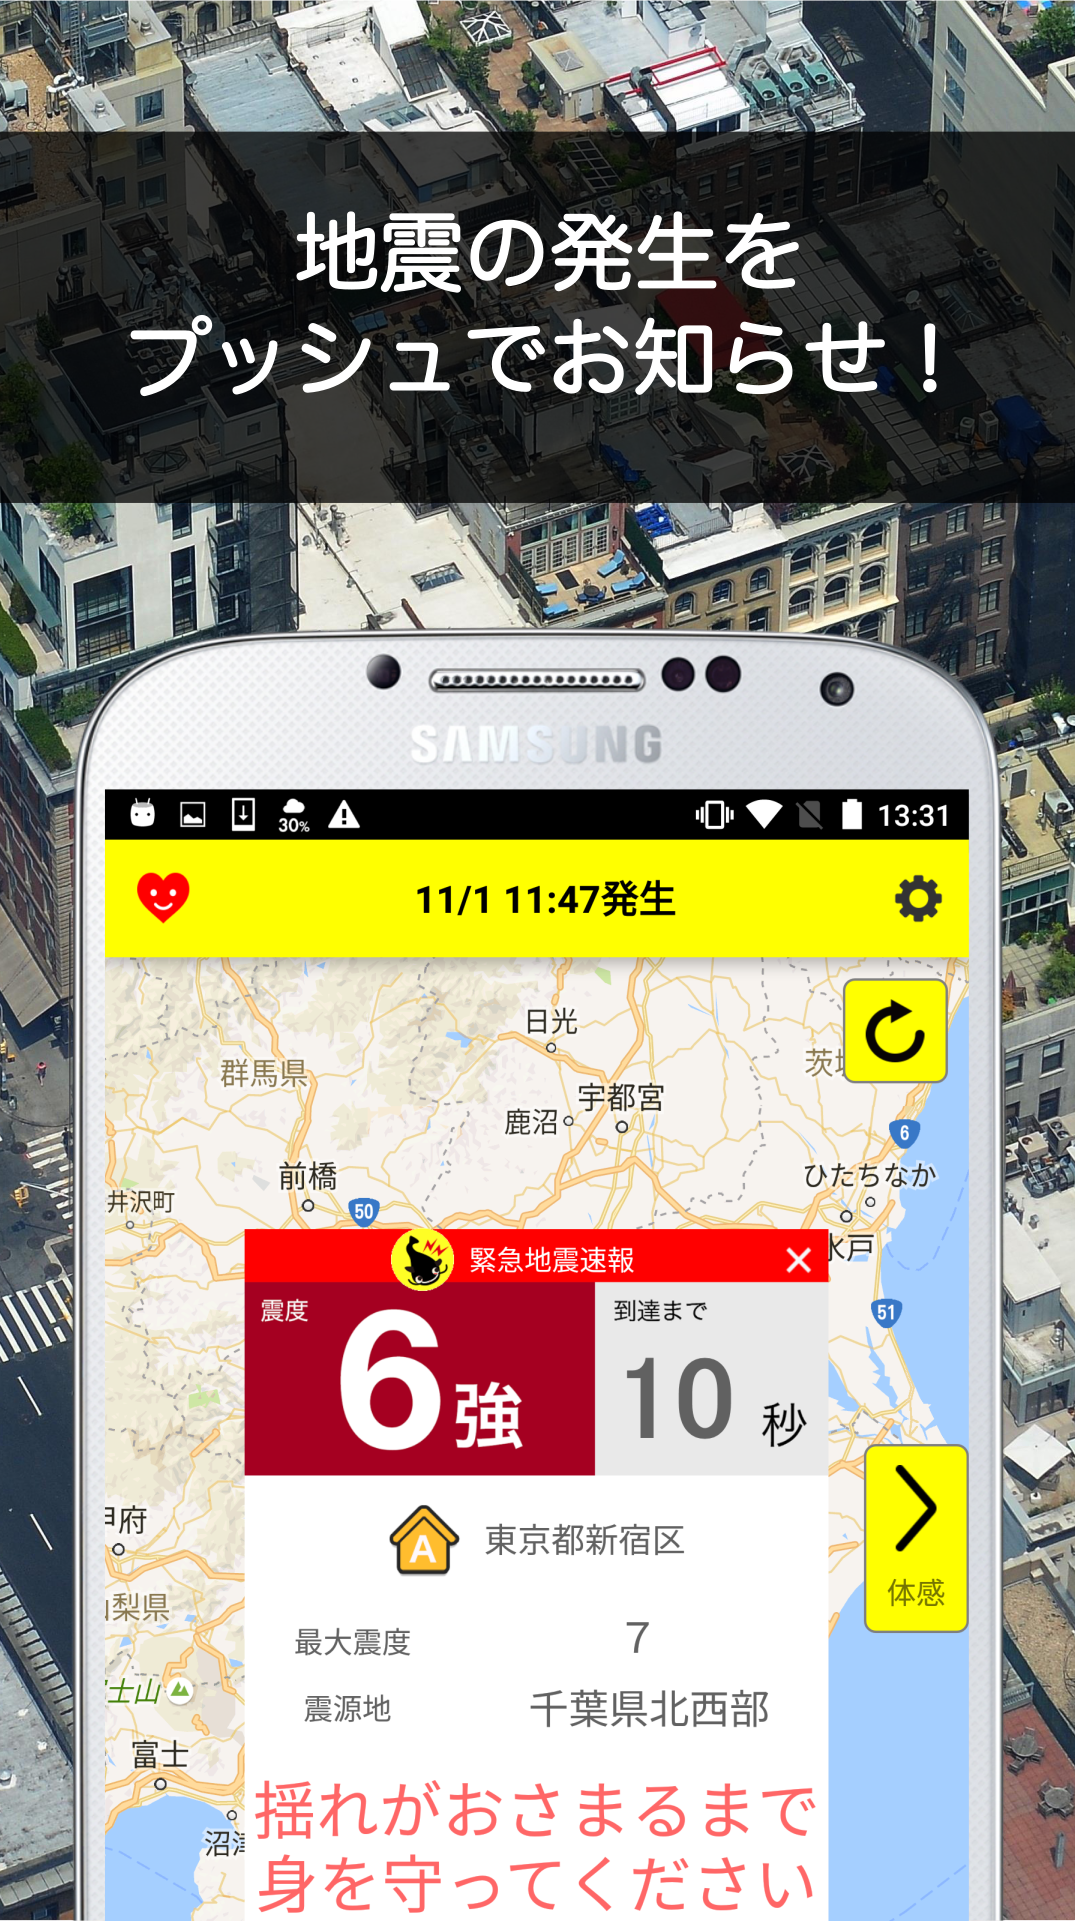 Android application Yurekuru Call screenshort